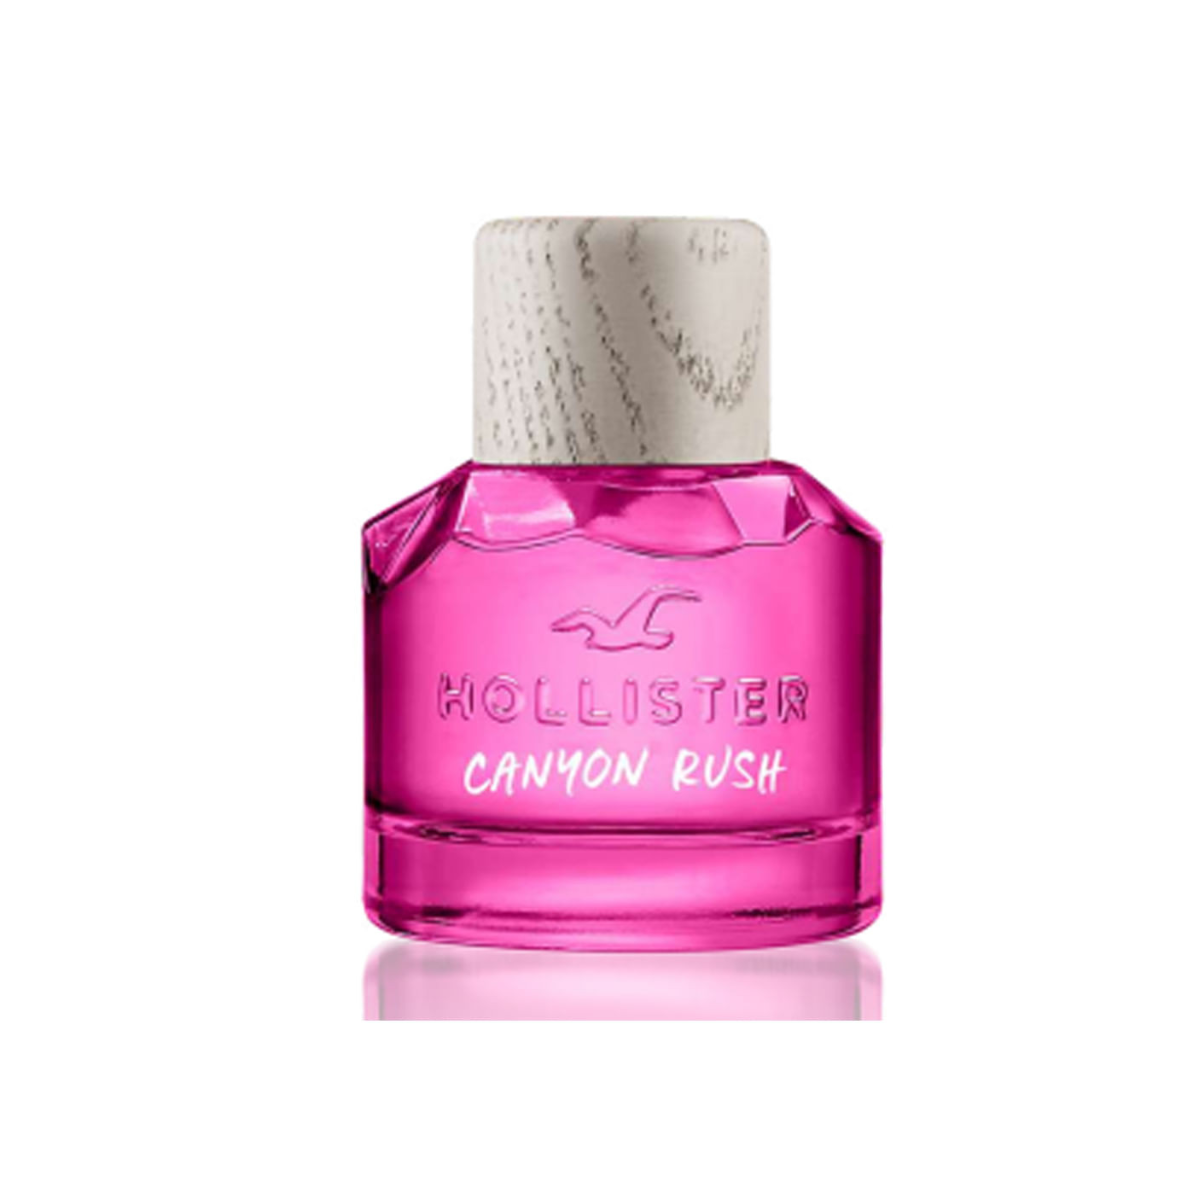 Hollister Canyon Rush For Her Eau De Parfum